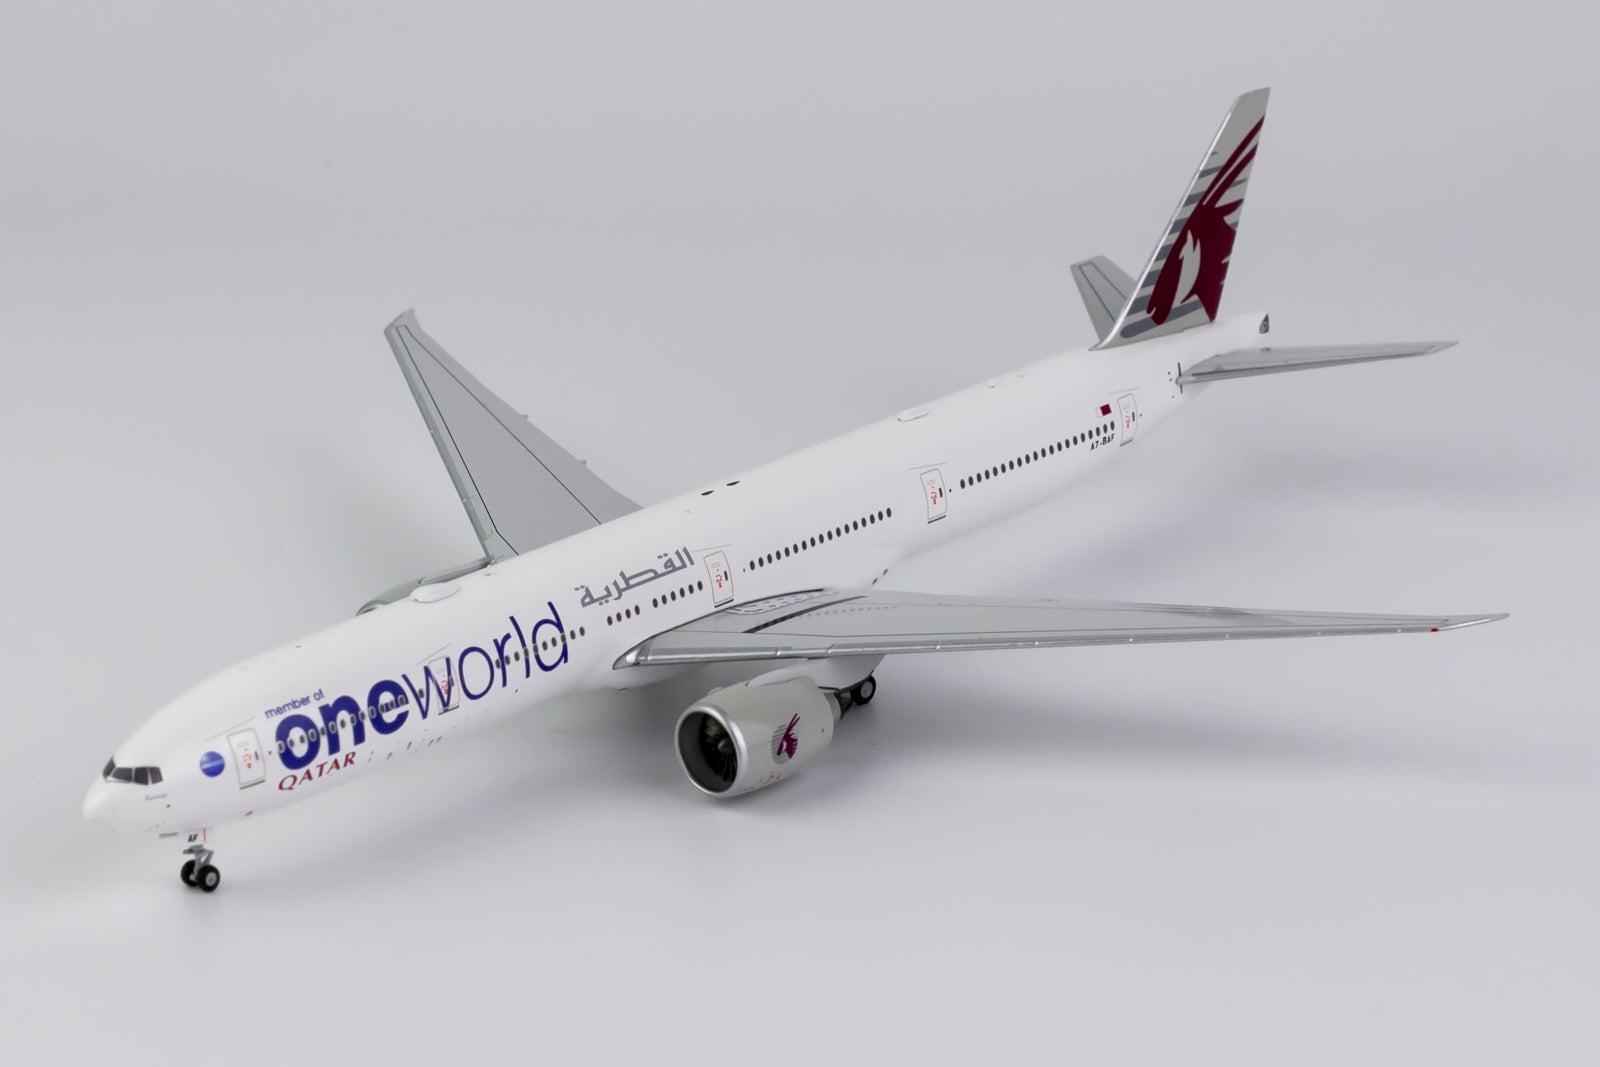 1:400 NG Models Qatar Airways Boeing 777-300ER 